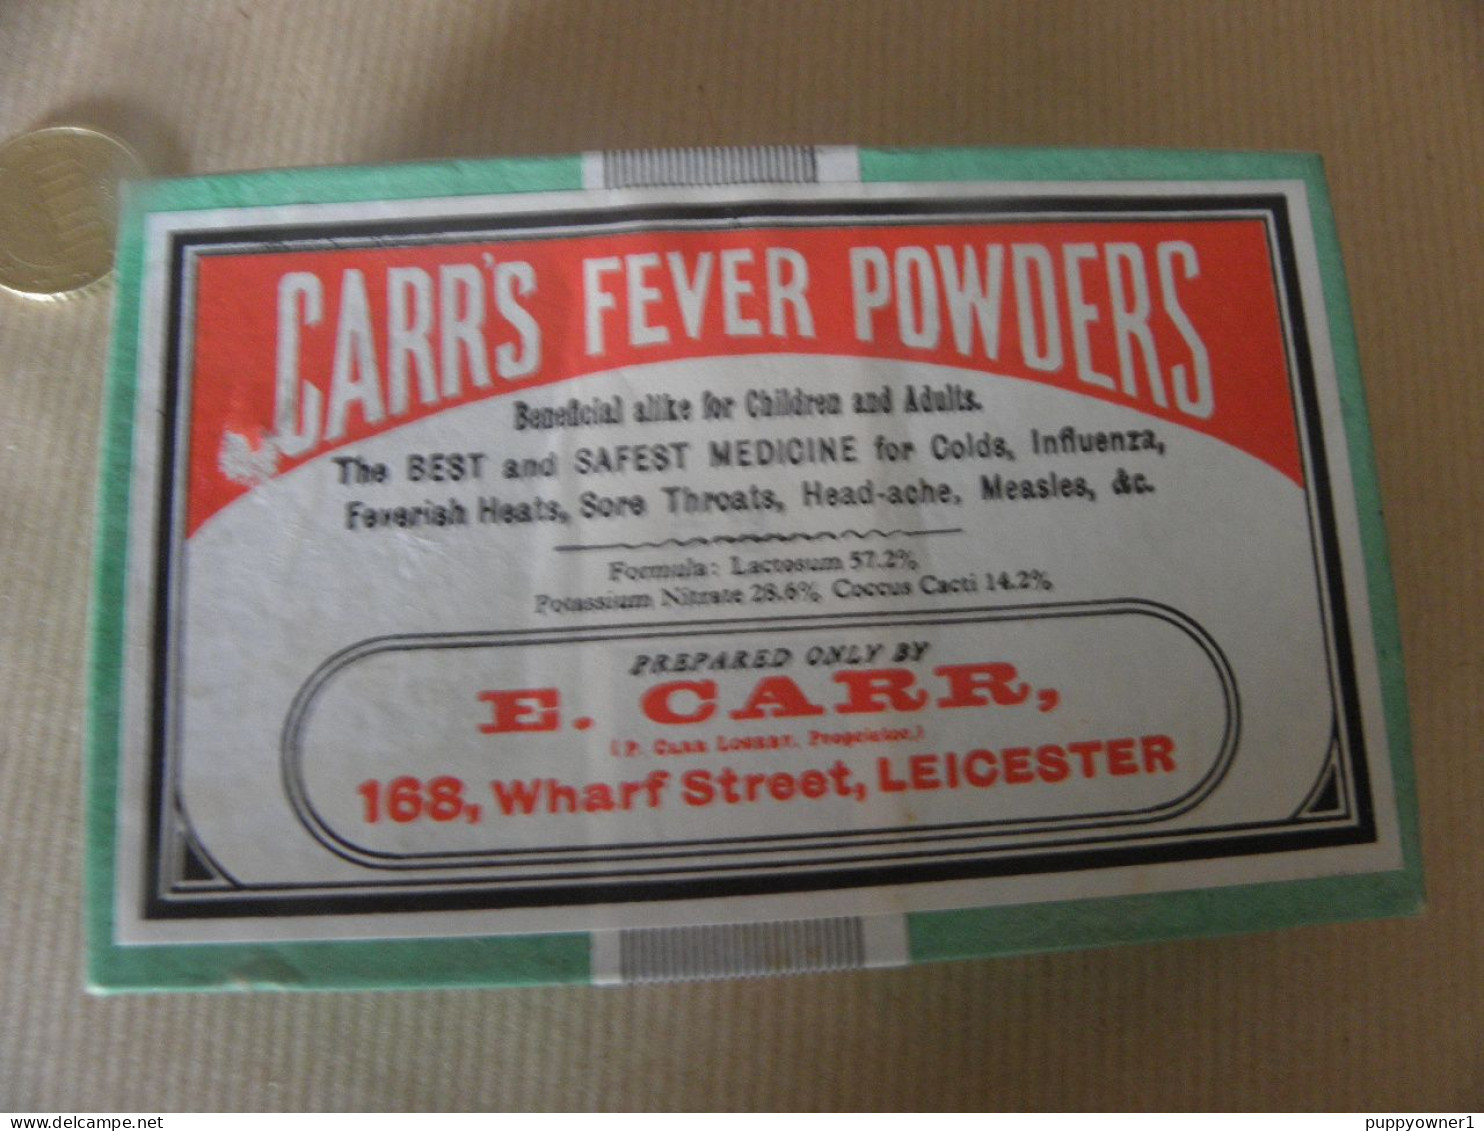 Antique Original Faux Médecine Guérit Tout , Carrs Fever Powders NE PAS UTILISER - Medical & Dental Equipment